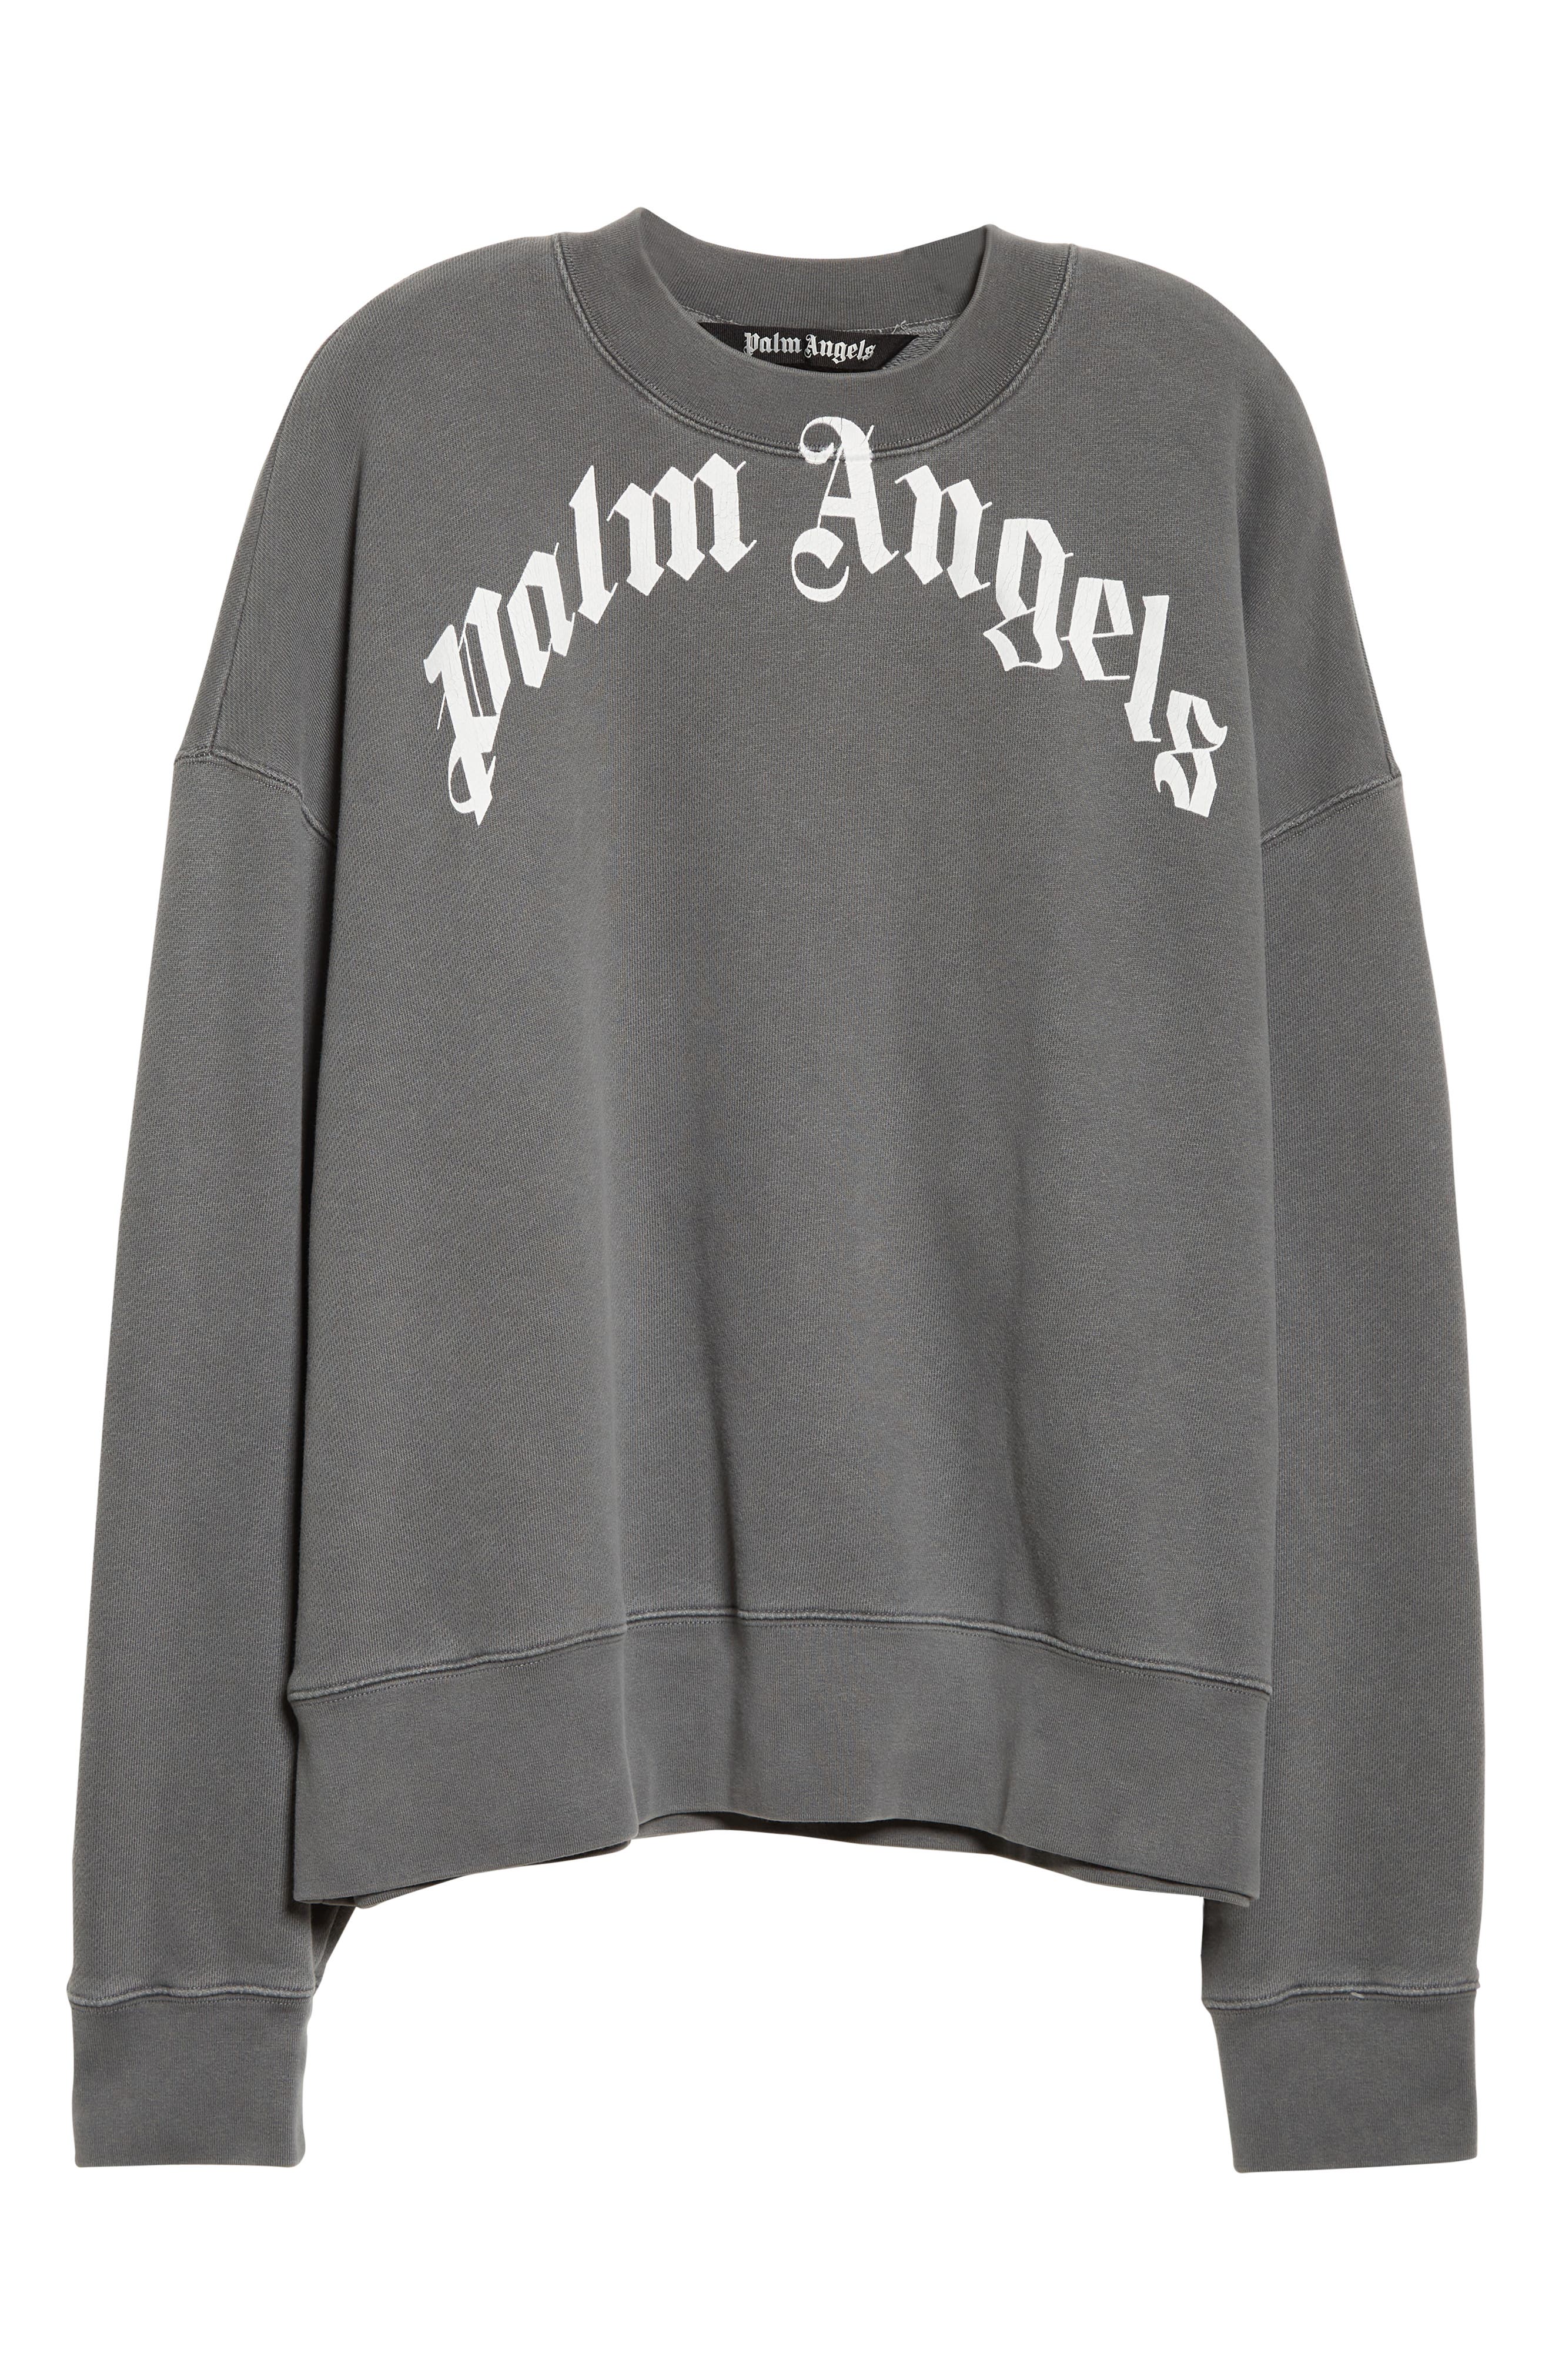 Palm Angels Men's Oversize Curved Logo Crewneck Sweatshirt in Black/White